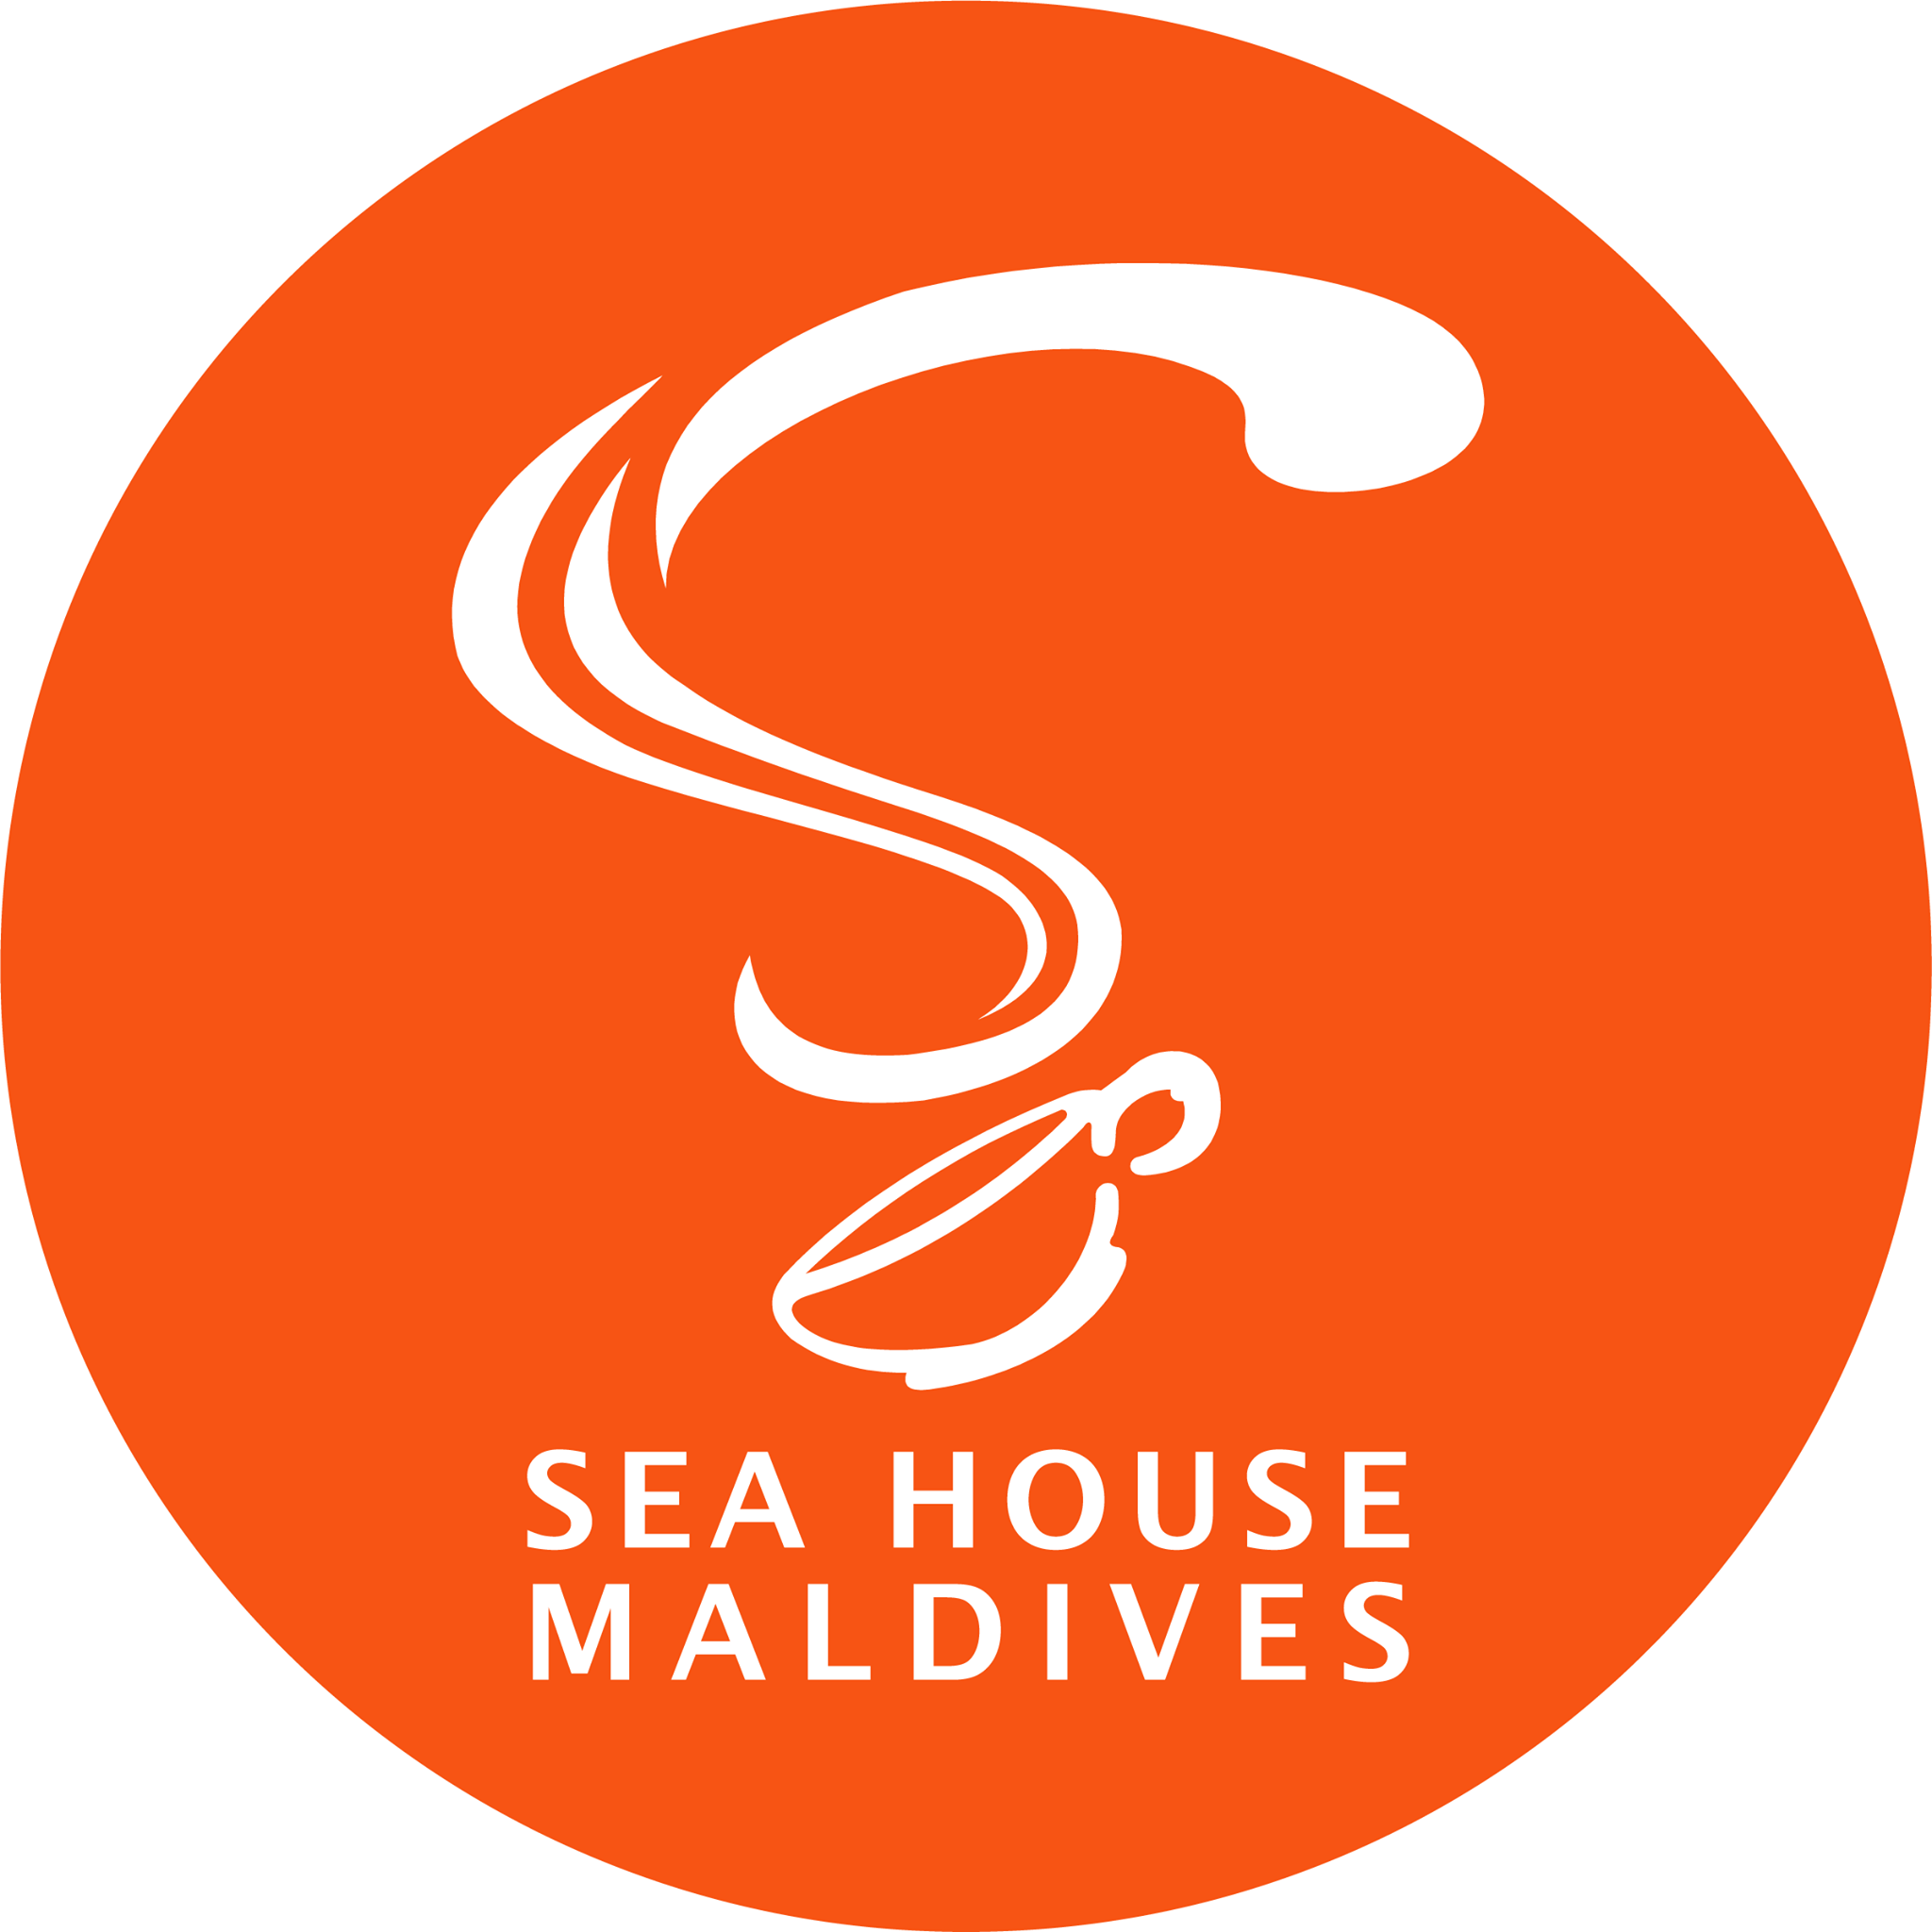 The Sea House Maldives